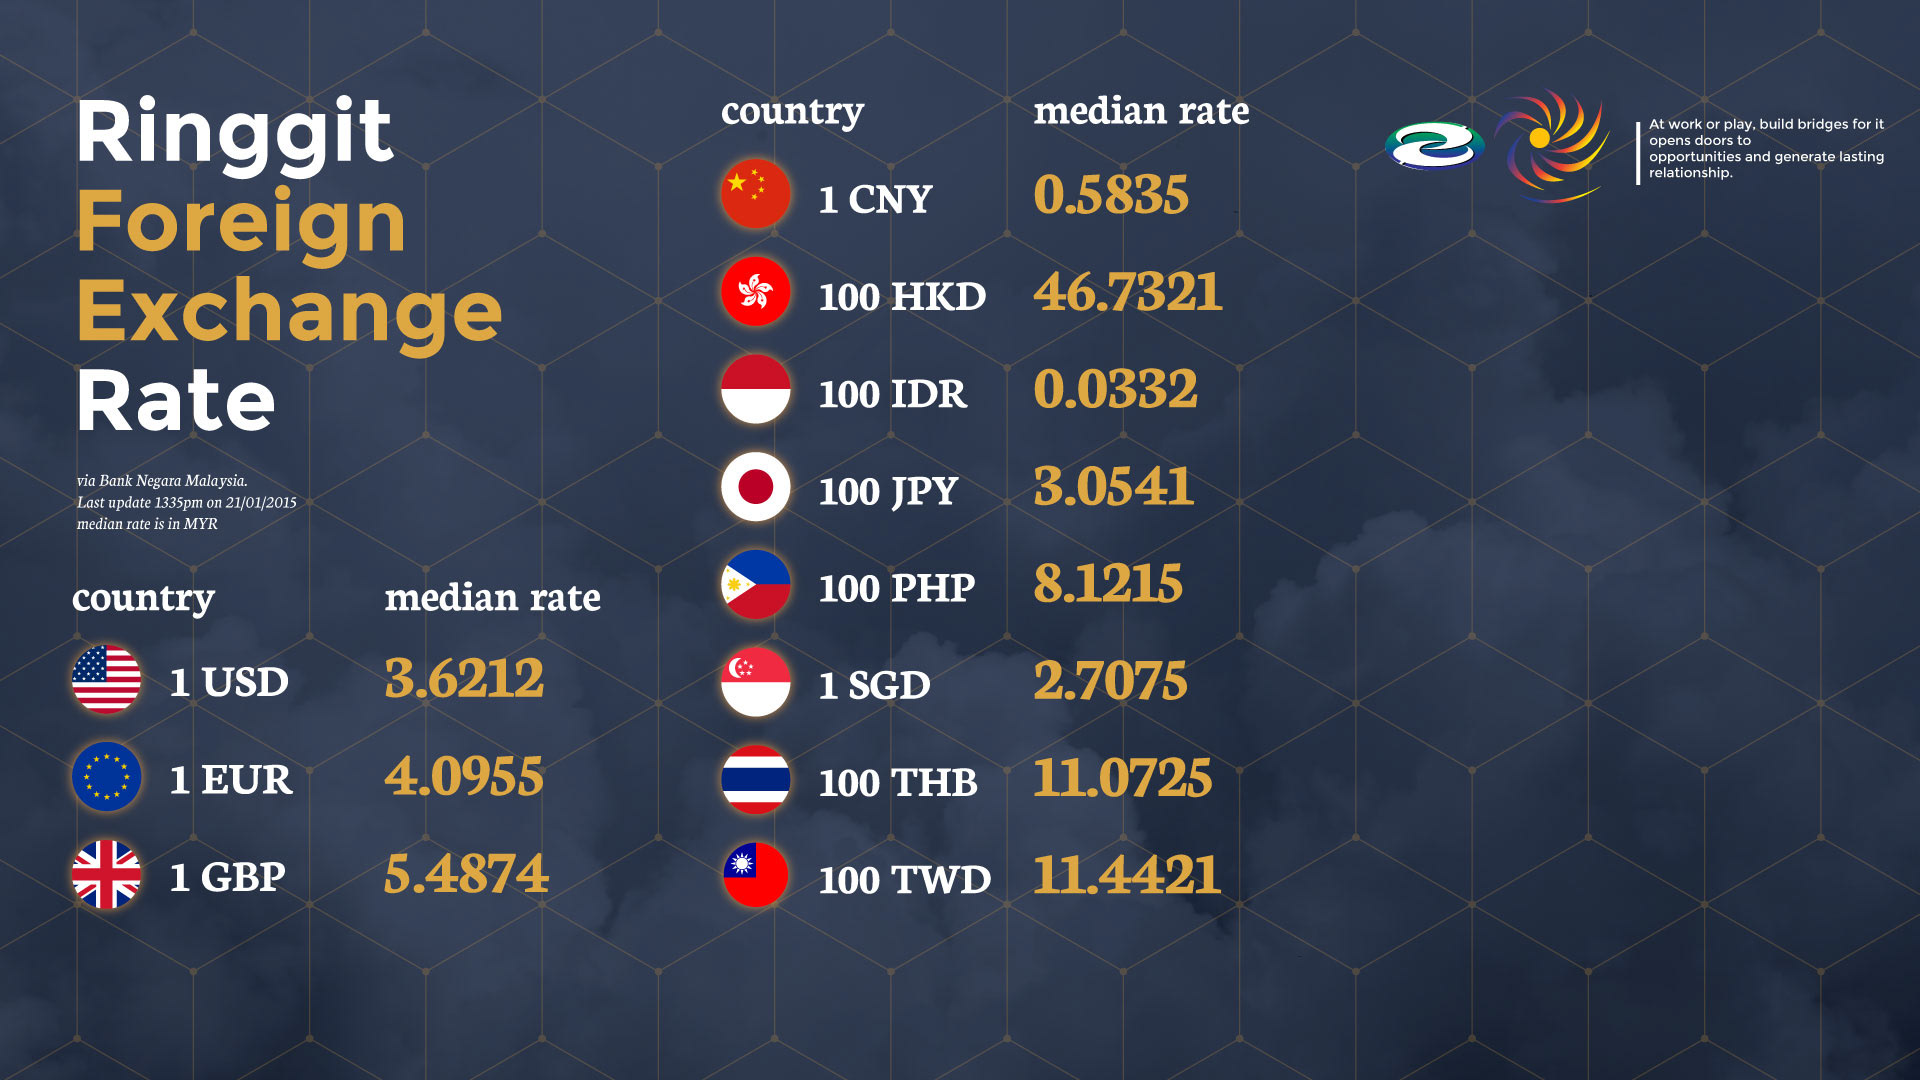 Bank negara foreign exchange rate